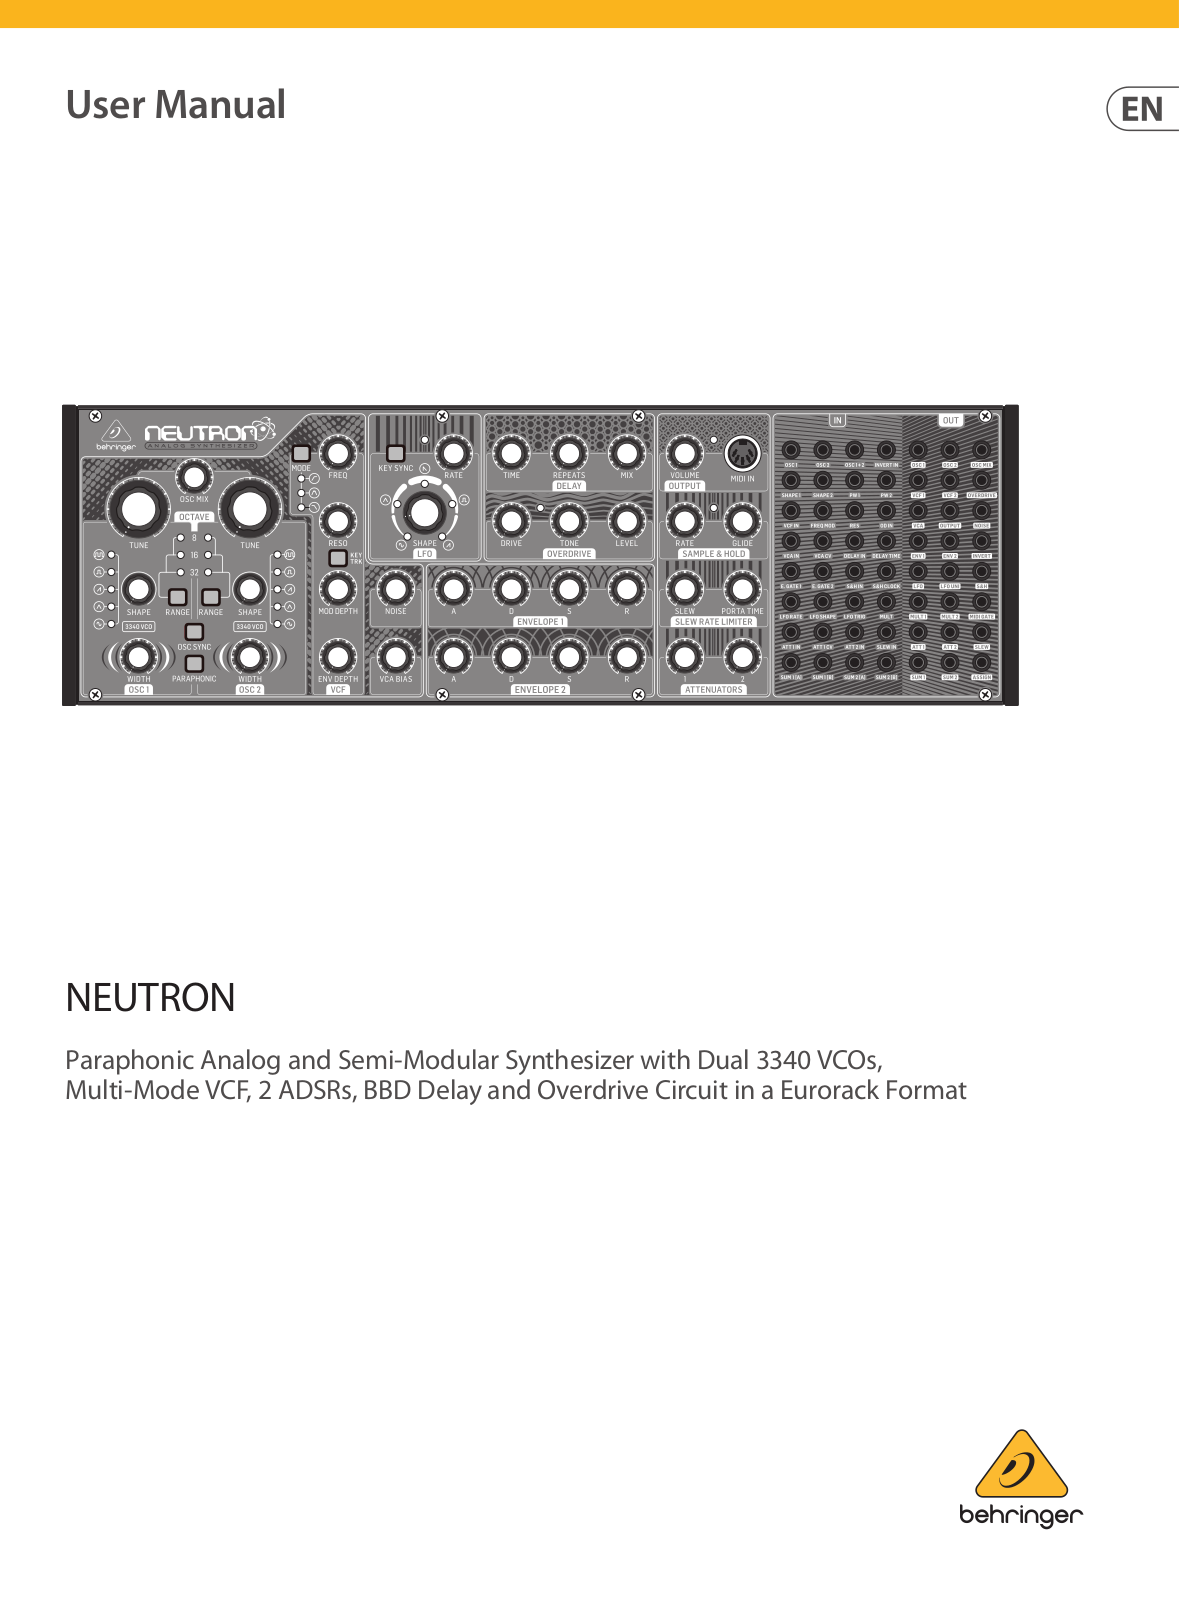 Behringer Neutron Service Manual